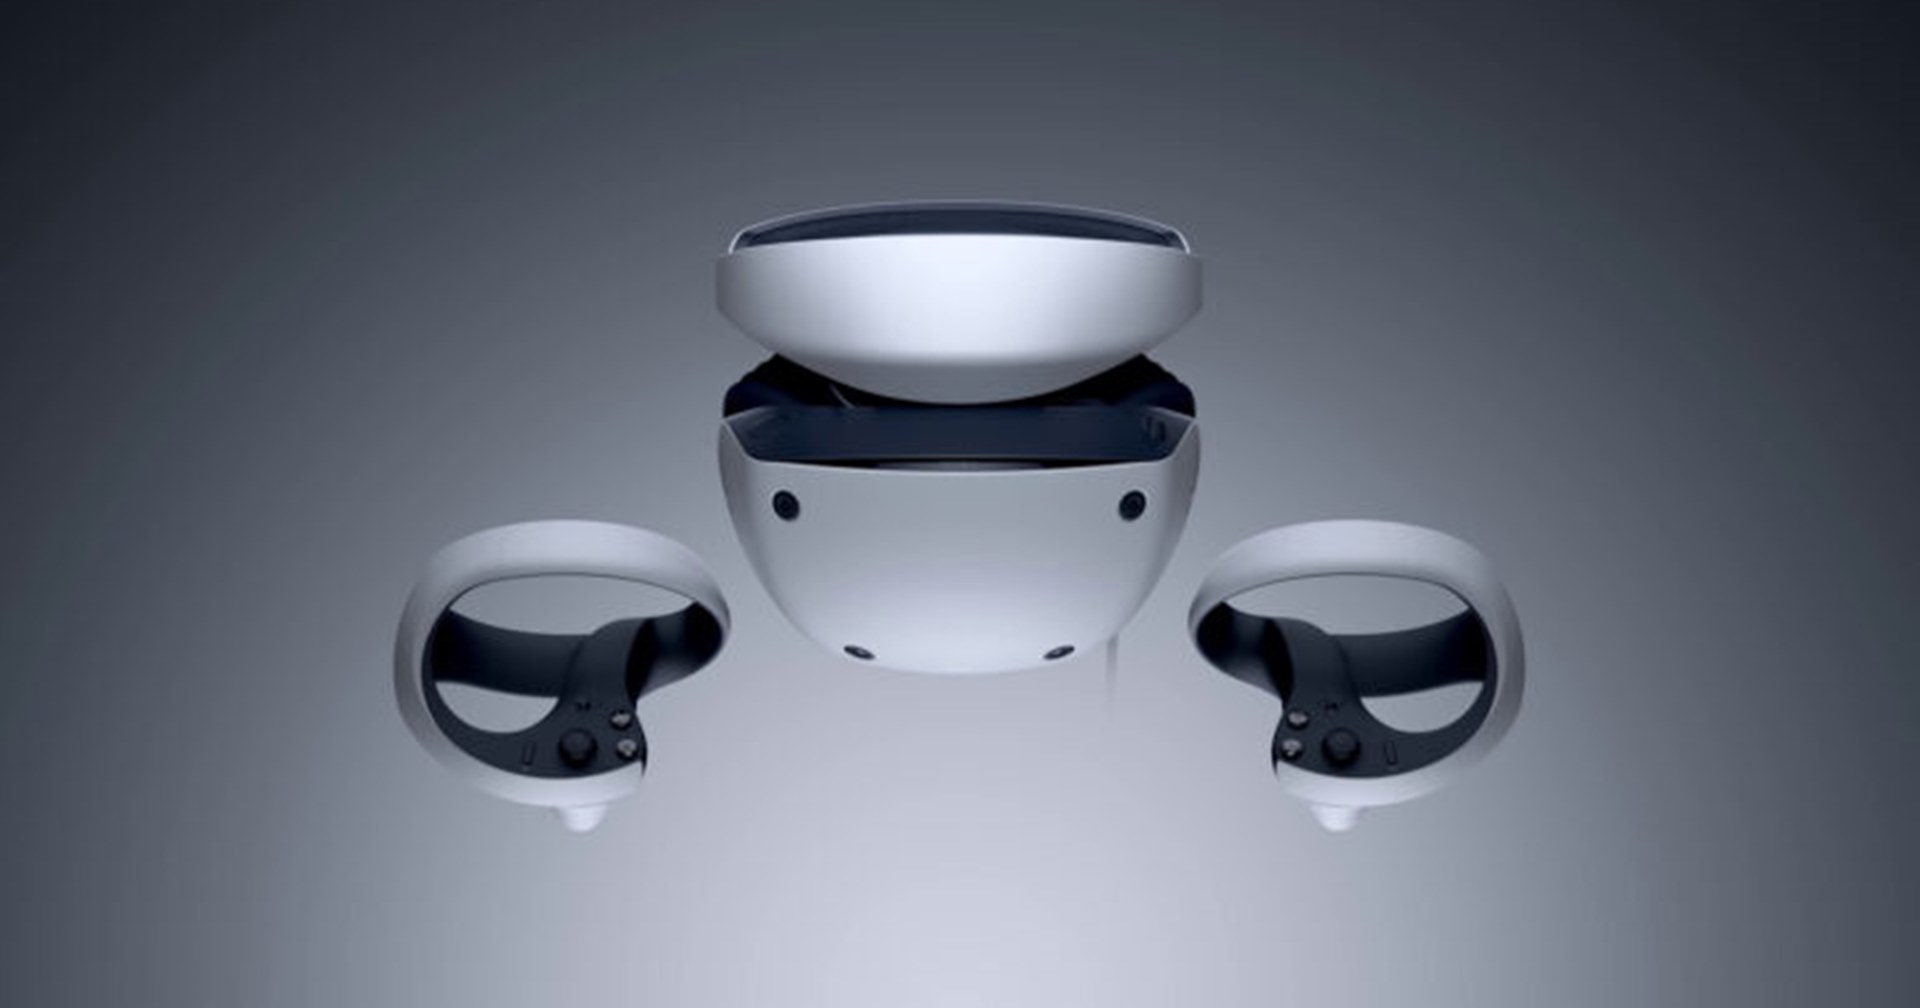 Bloomberg ระบุ PlayStation VR2 ล็อตแรกจะผลิตจำนวน 2 ล้านชุด